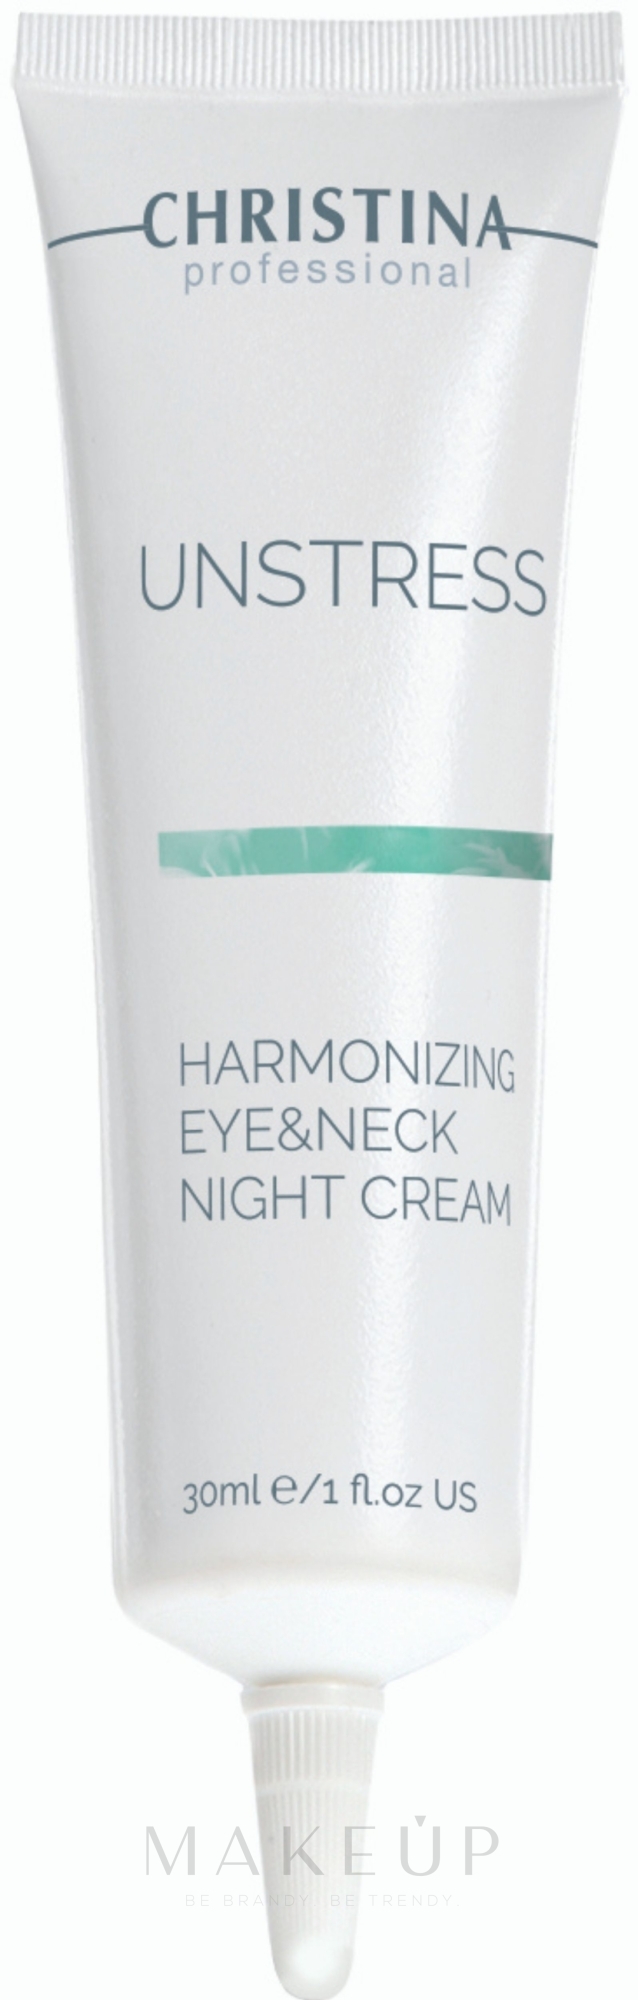 Harmonisierende Augen & Hals Nachtcreme - Christina Unstress Harmonizing Night Cream For Eye And Neck — Bild 30 ml